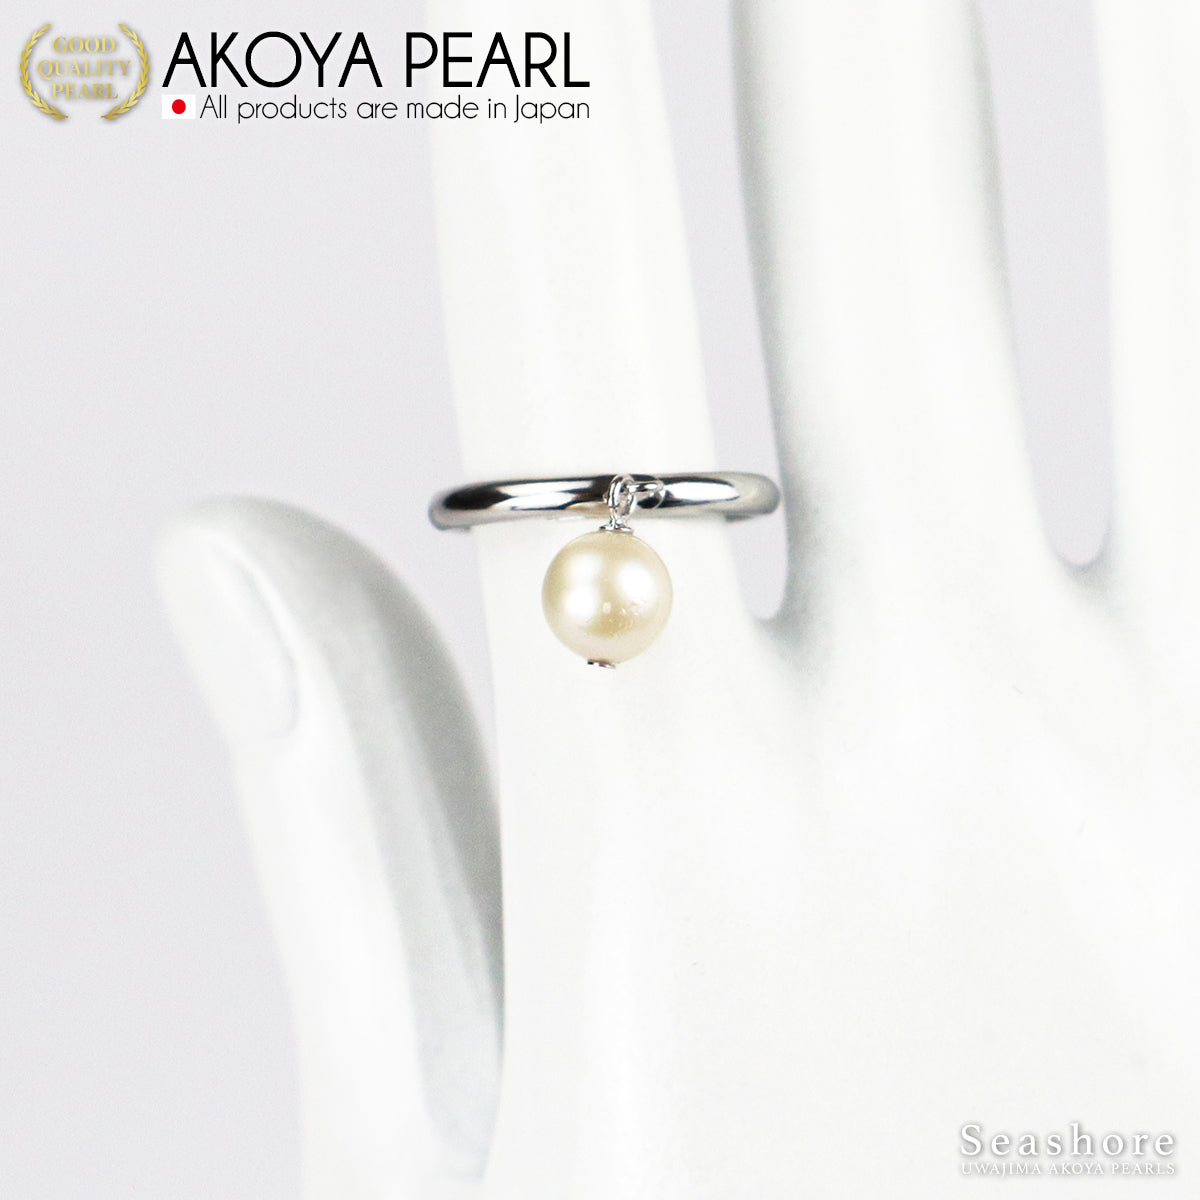 Pearl Ring Swing Type Brass Rhodium Free Size 6.5-7.5mm Akoya Pearl (3935)